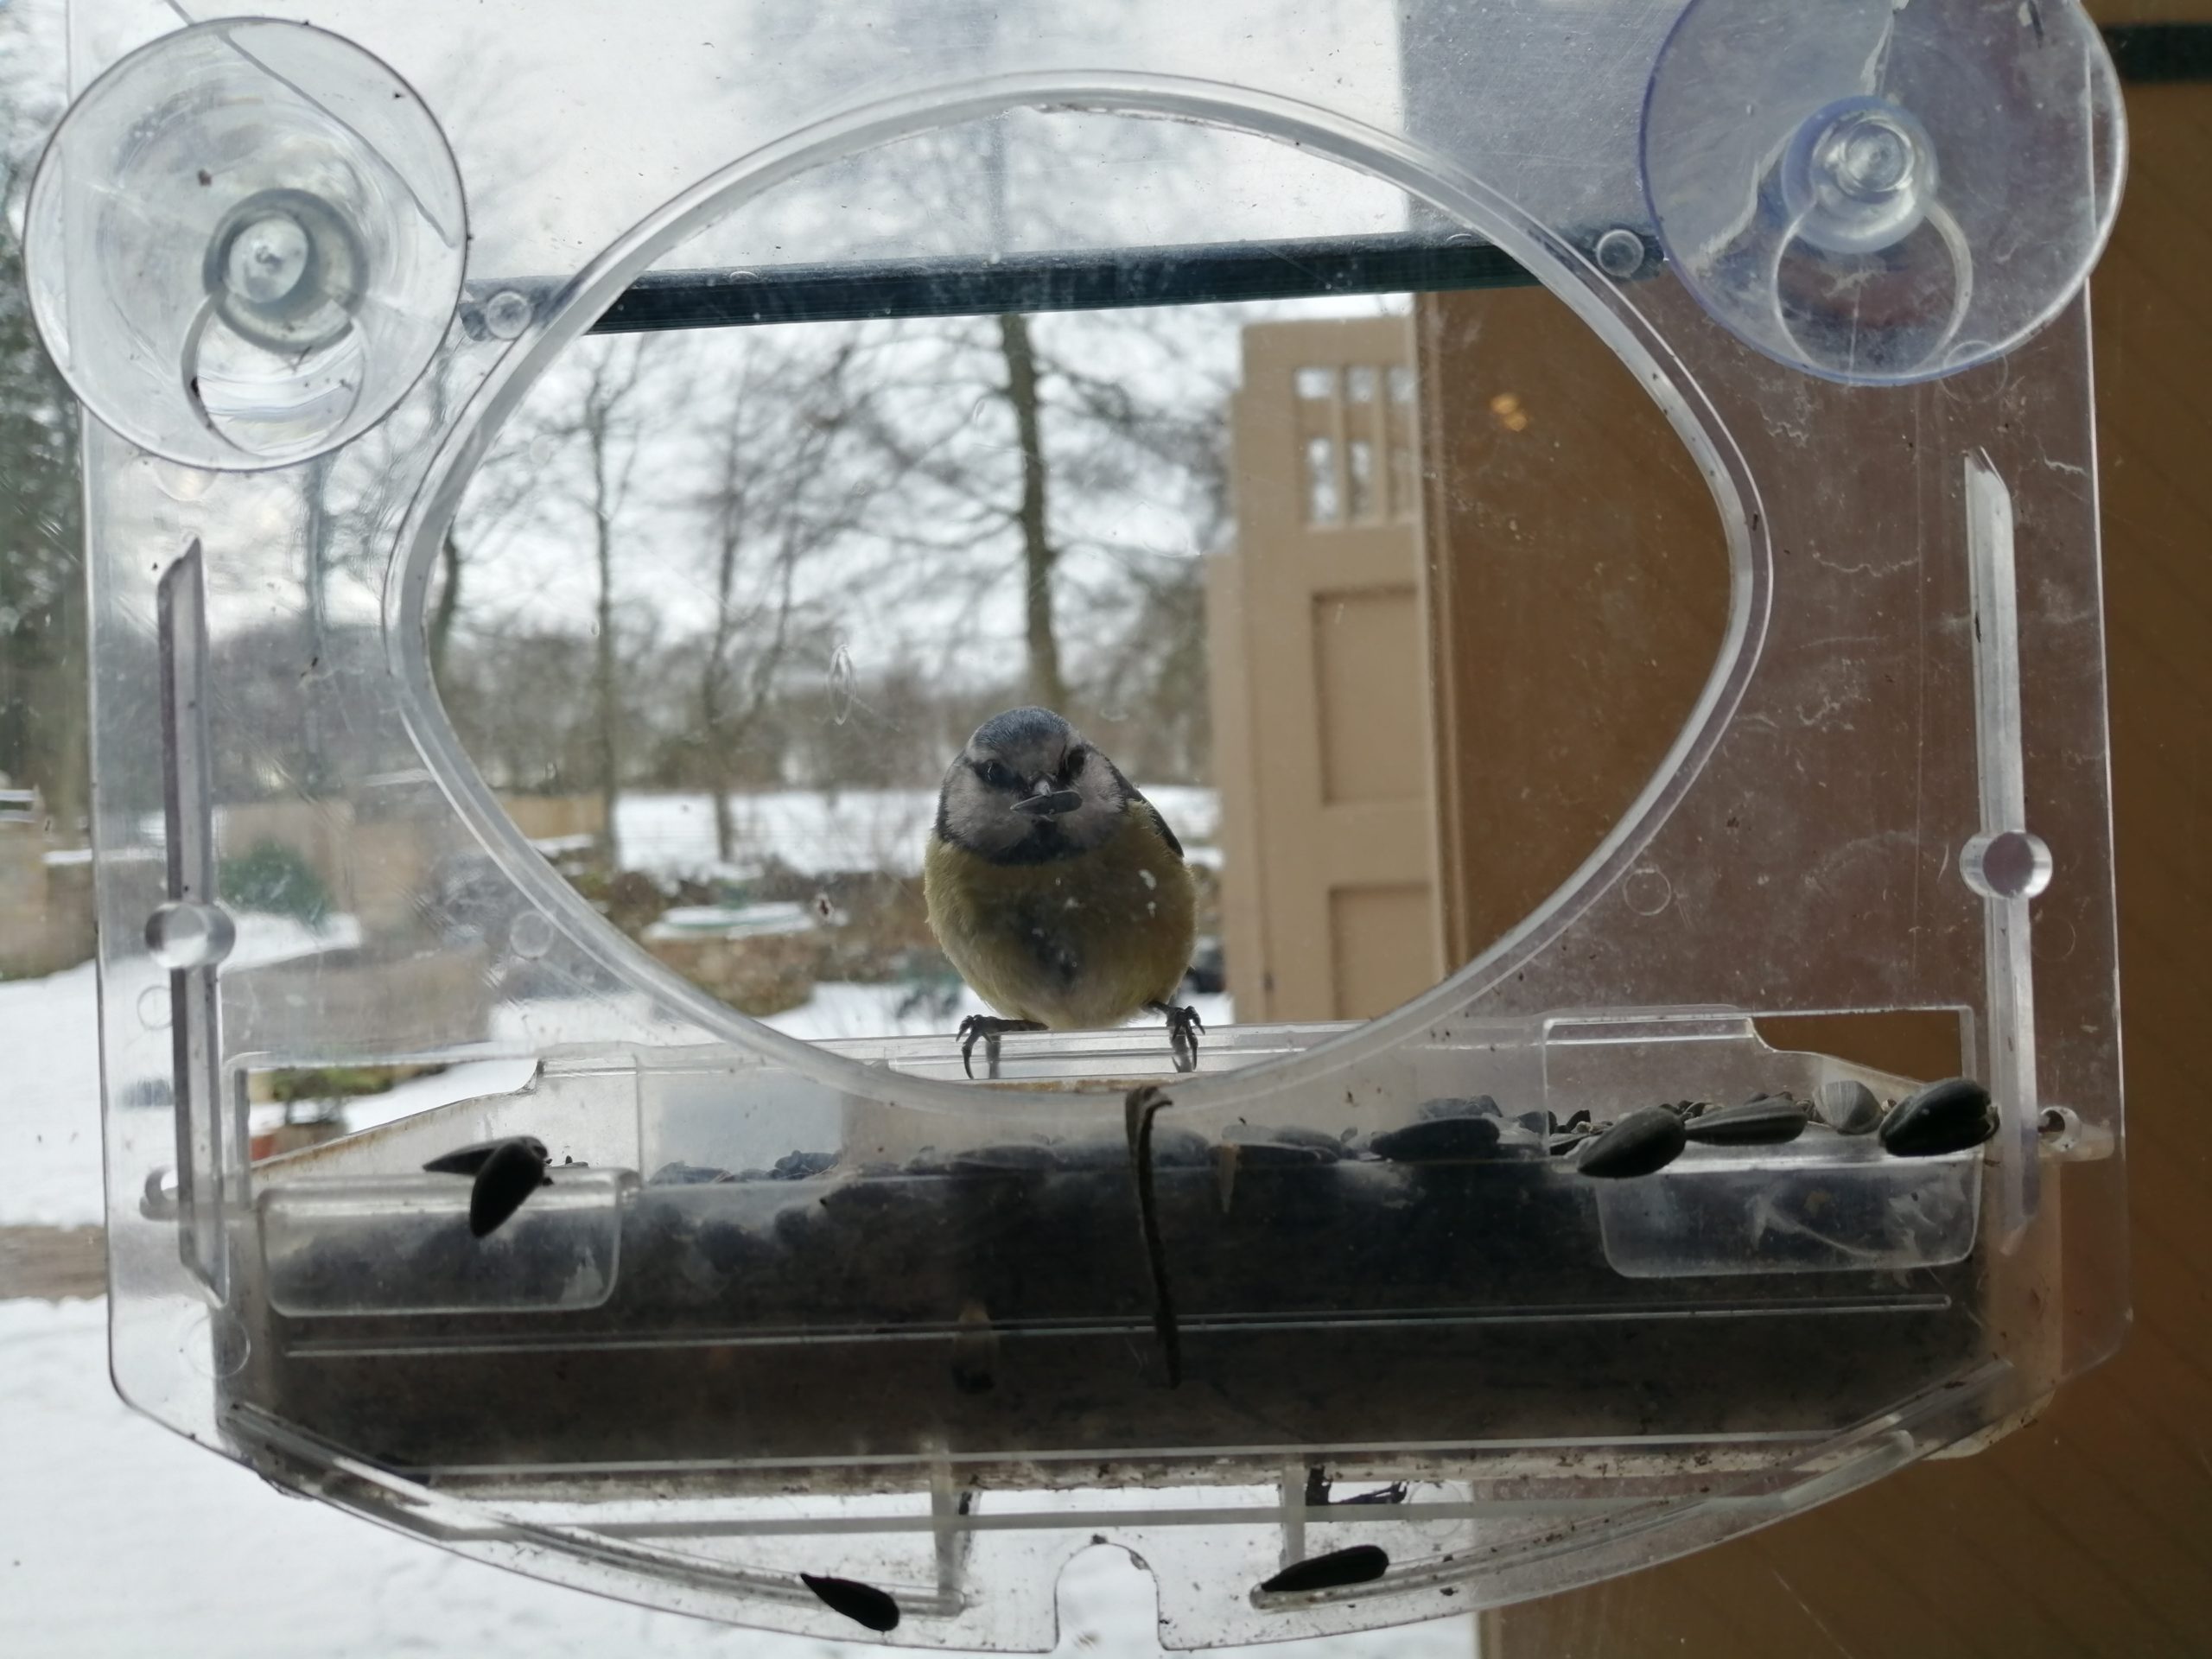 inside window bird feeder